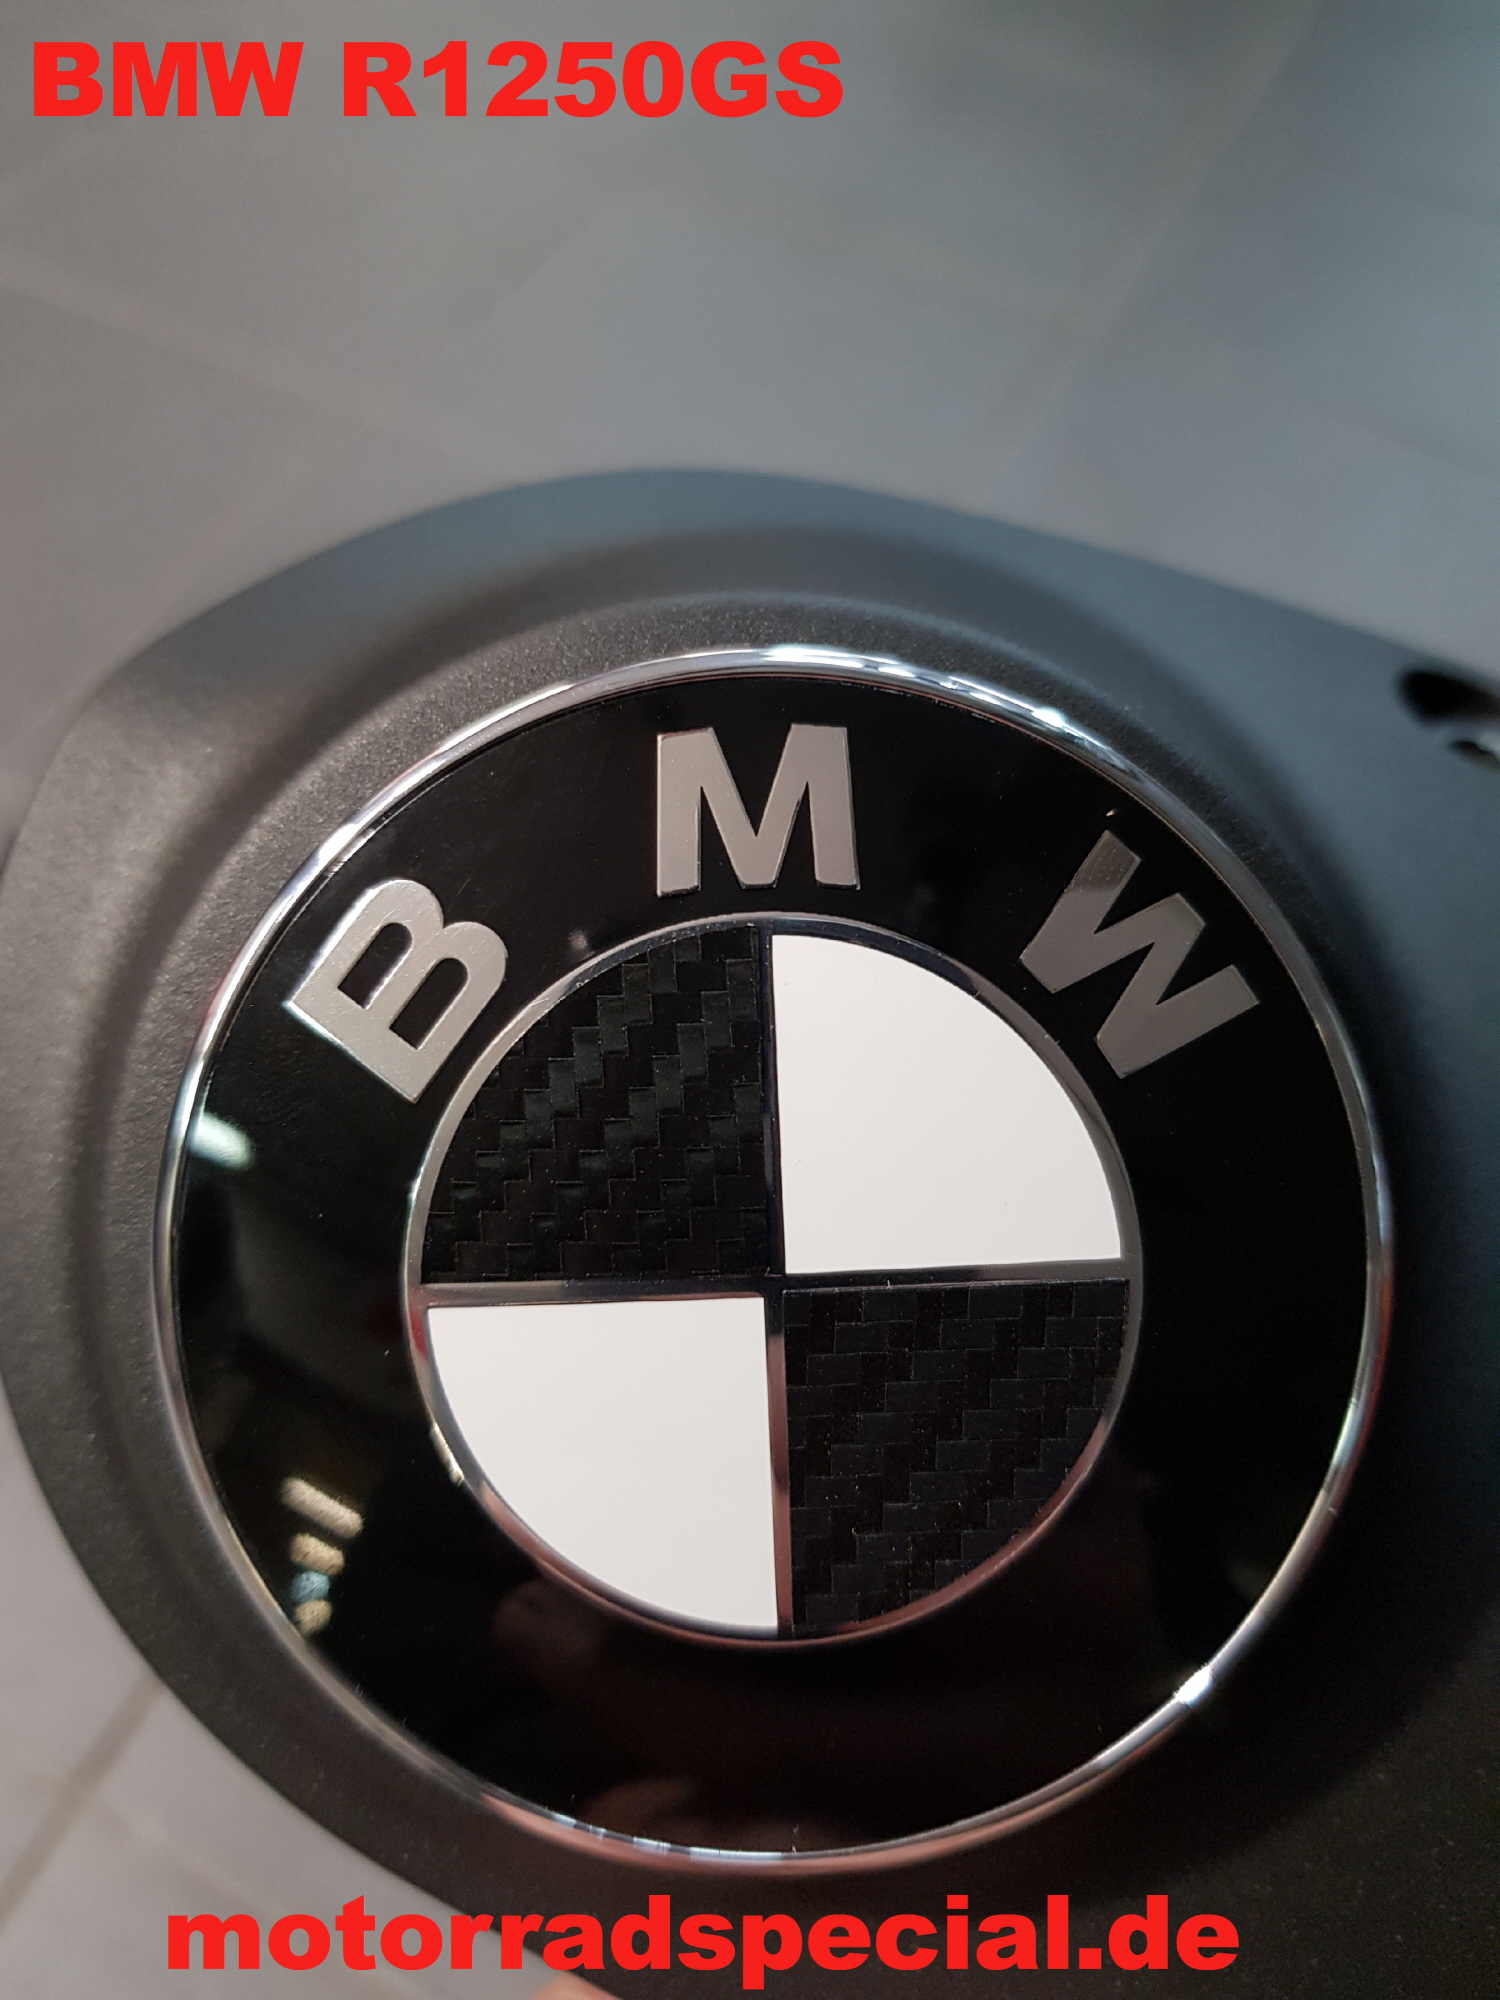 https://www.motorradspecial.com/wp-content/uploads/2020/12/bmw_blinker_r1250gs_emblem.jpg